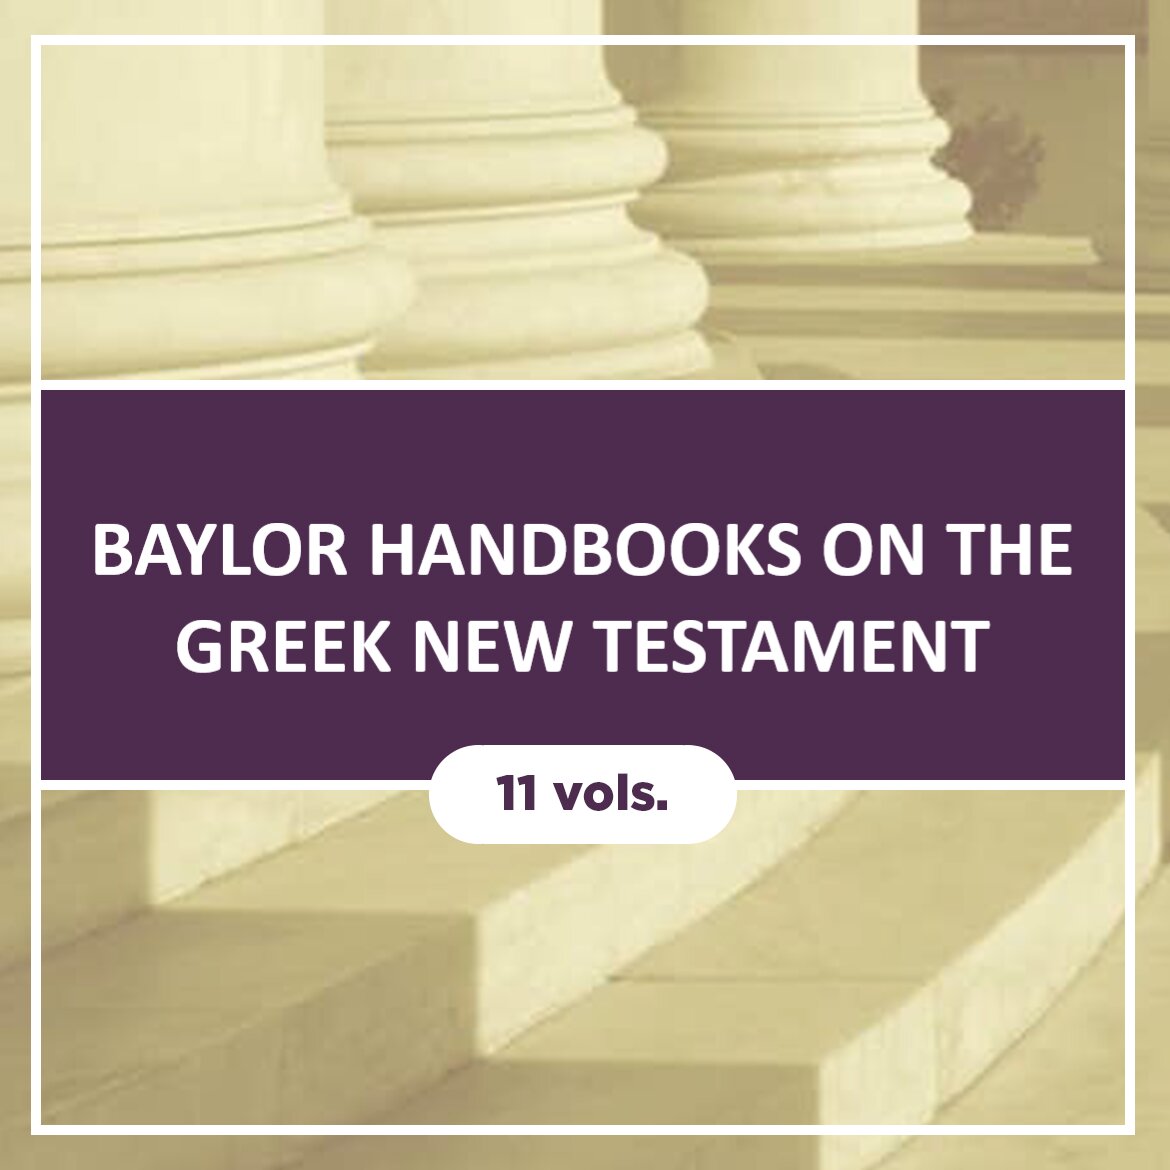 Baylor Handbooks on the Greek New Testament (11 vols.)